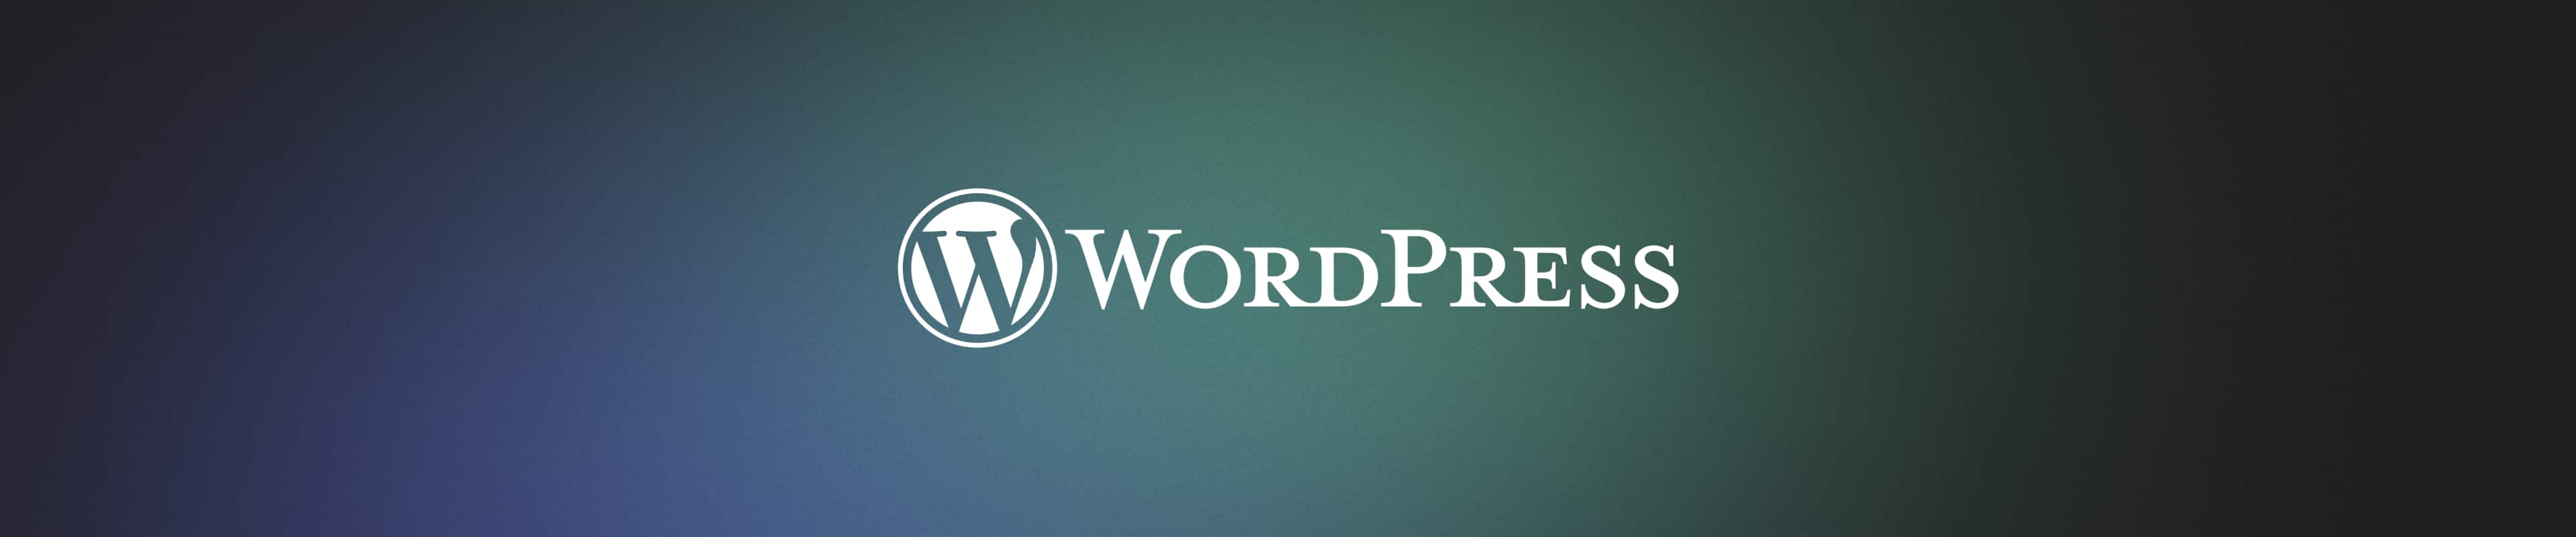 Wordpress web development agency